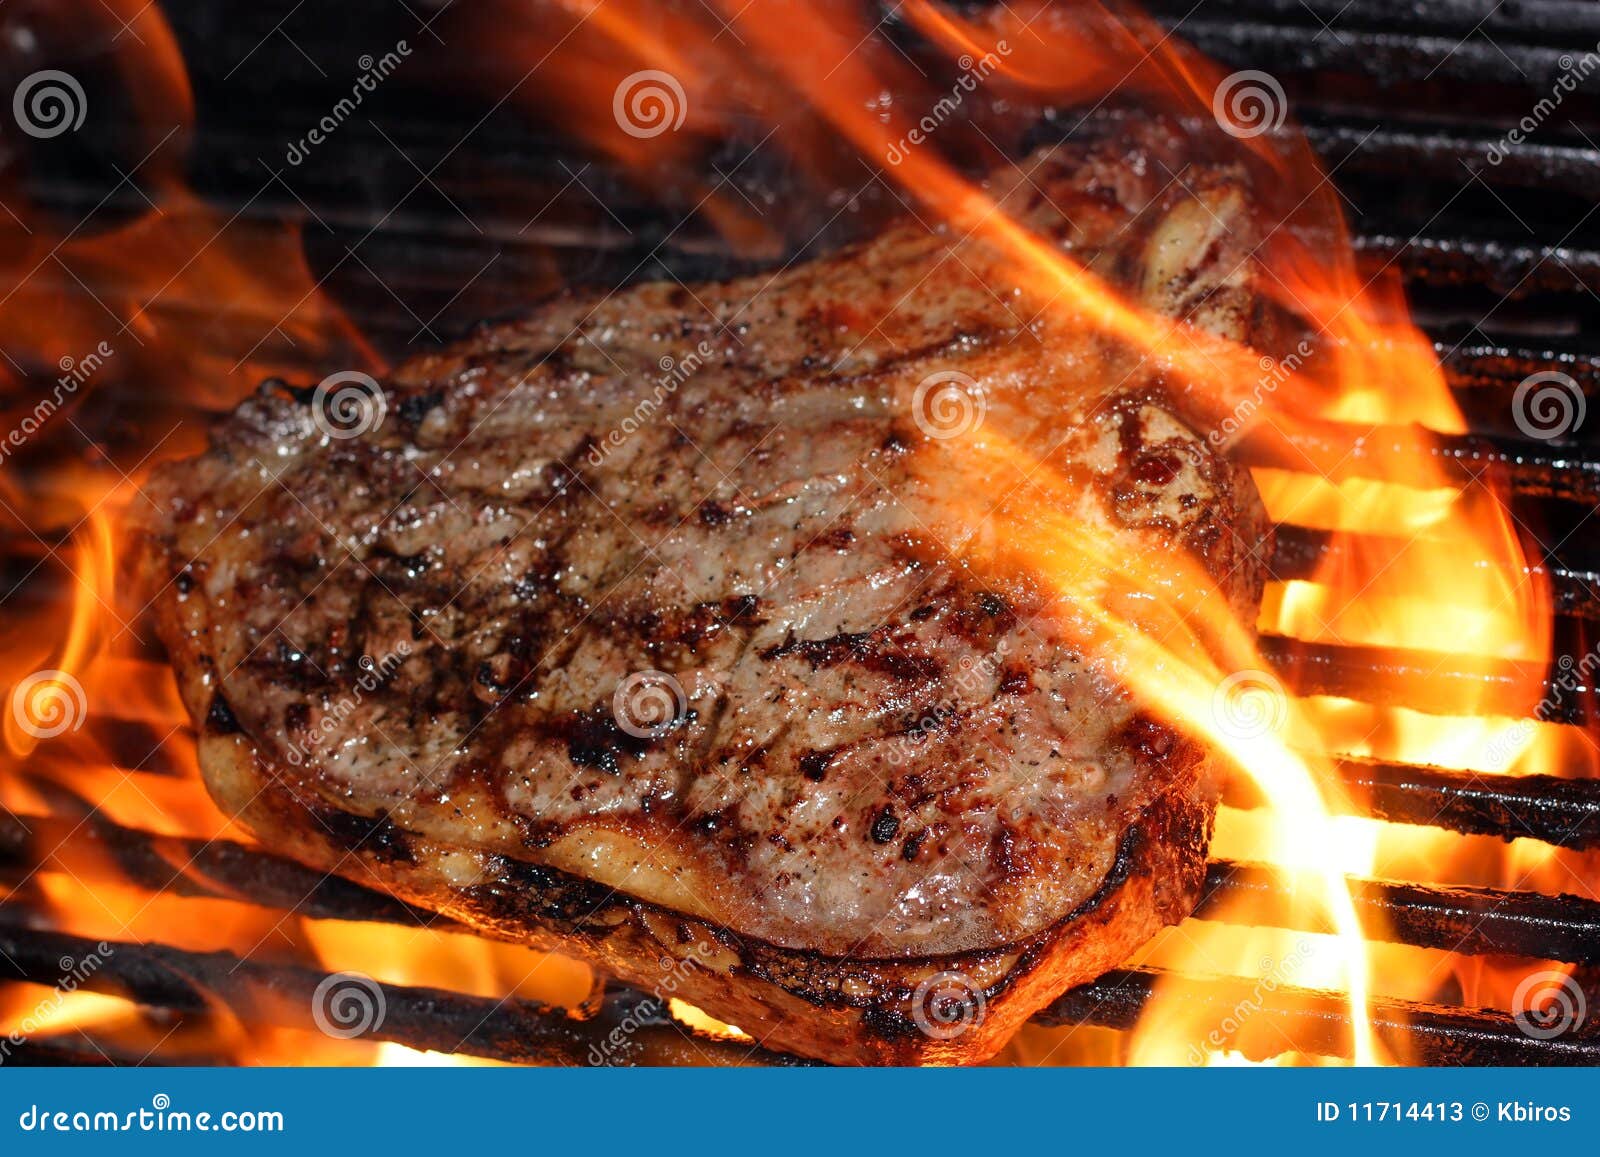 flaming steak